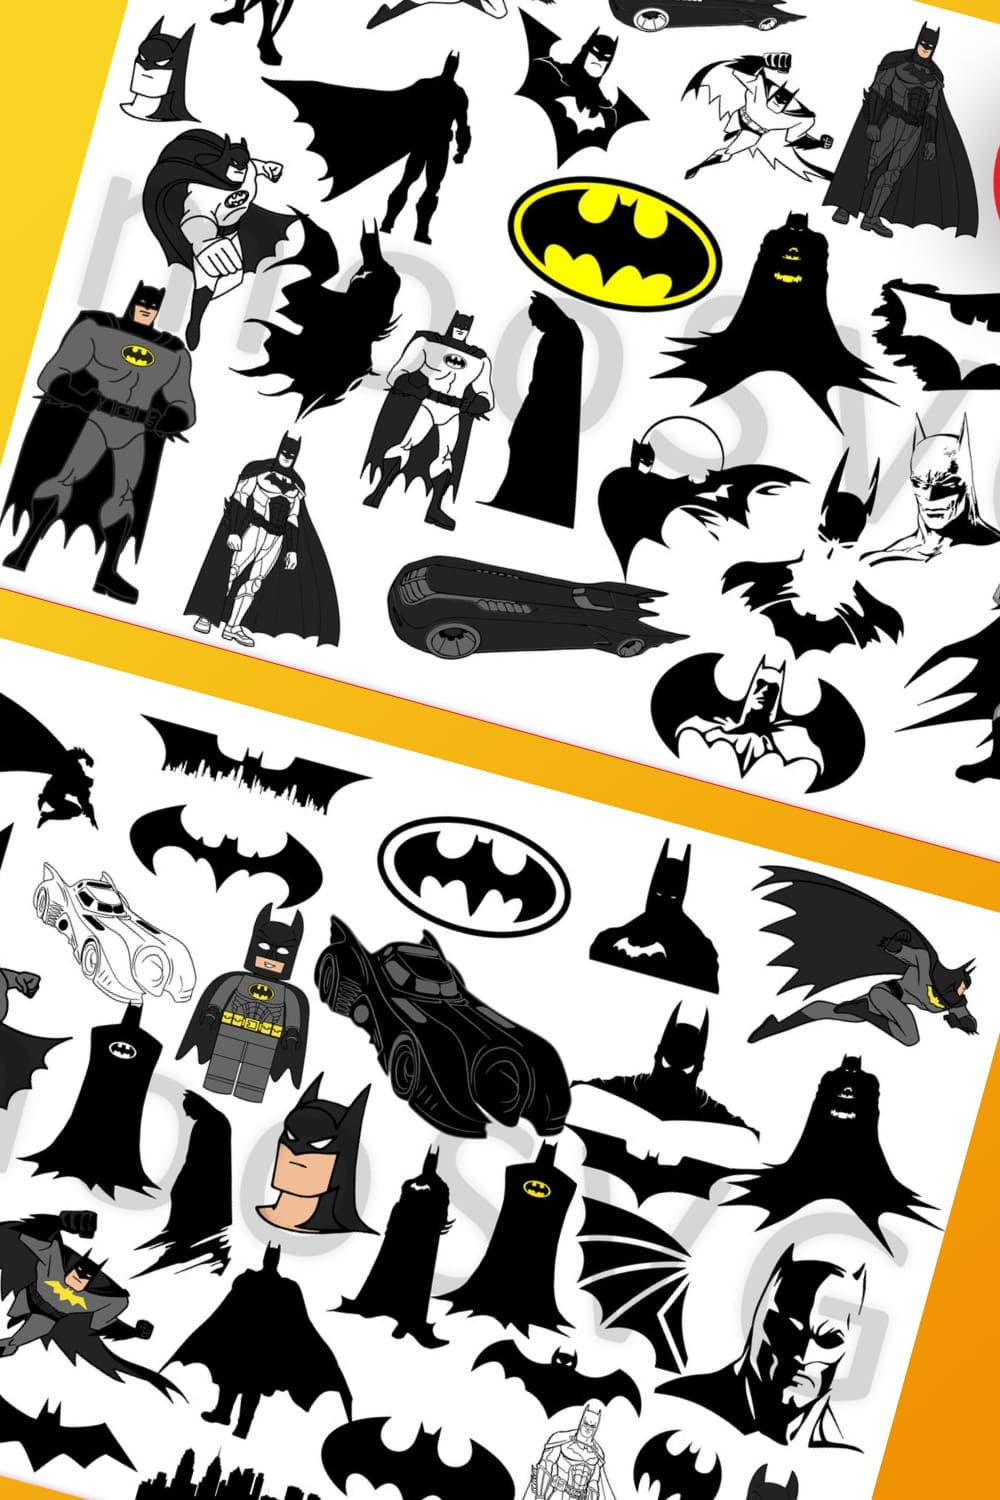 So huge batman collection.